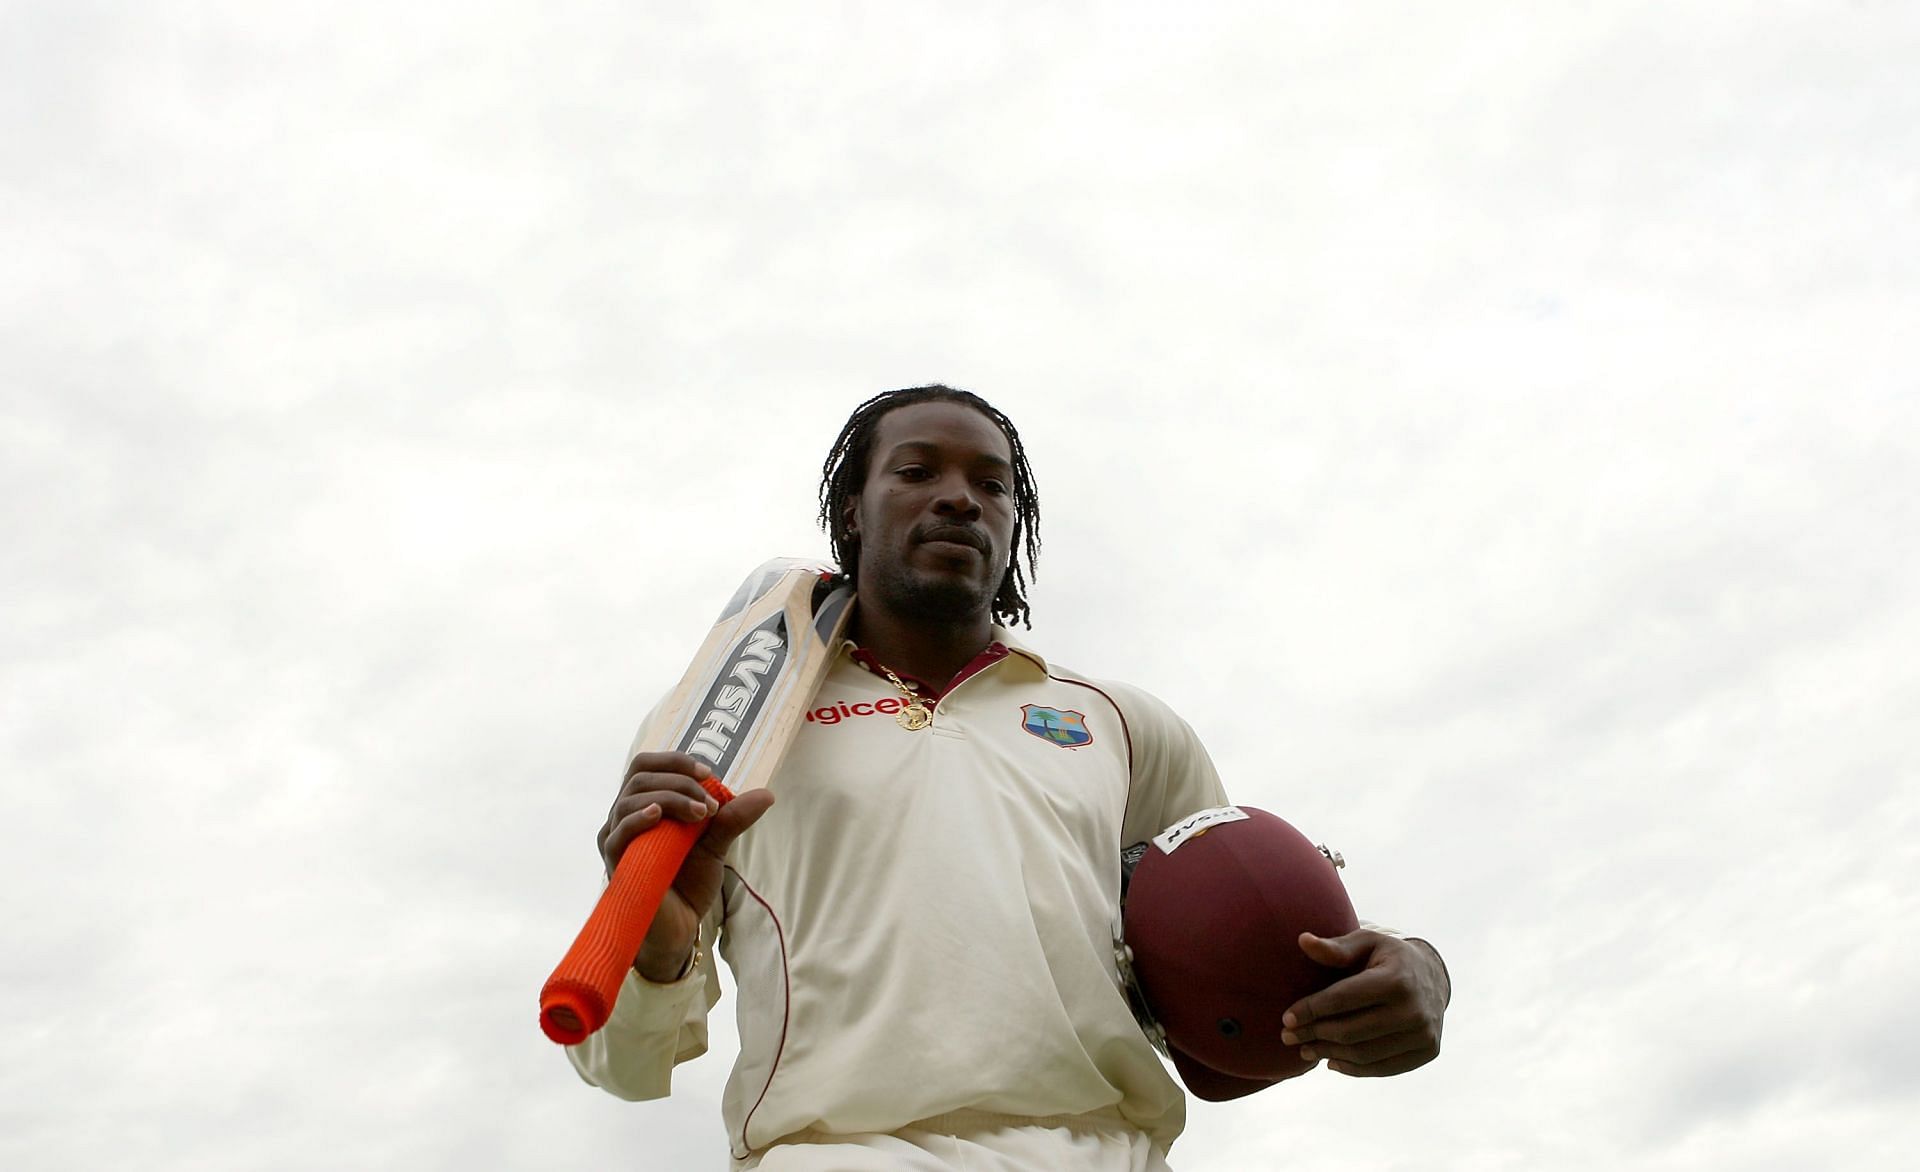 Second Test - Australia v West Indies: Day 4